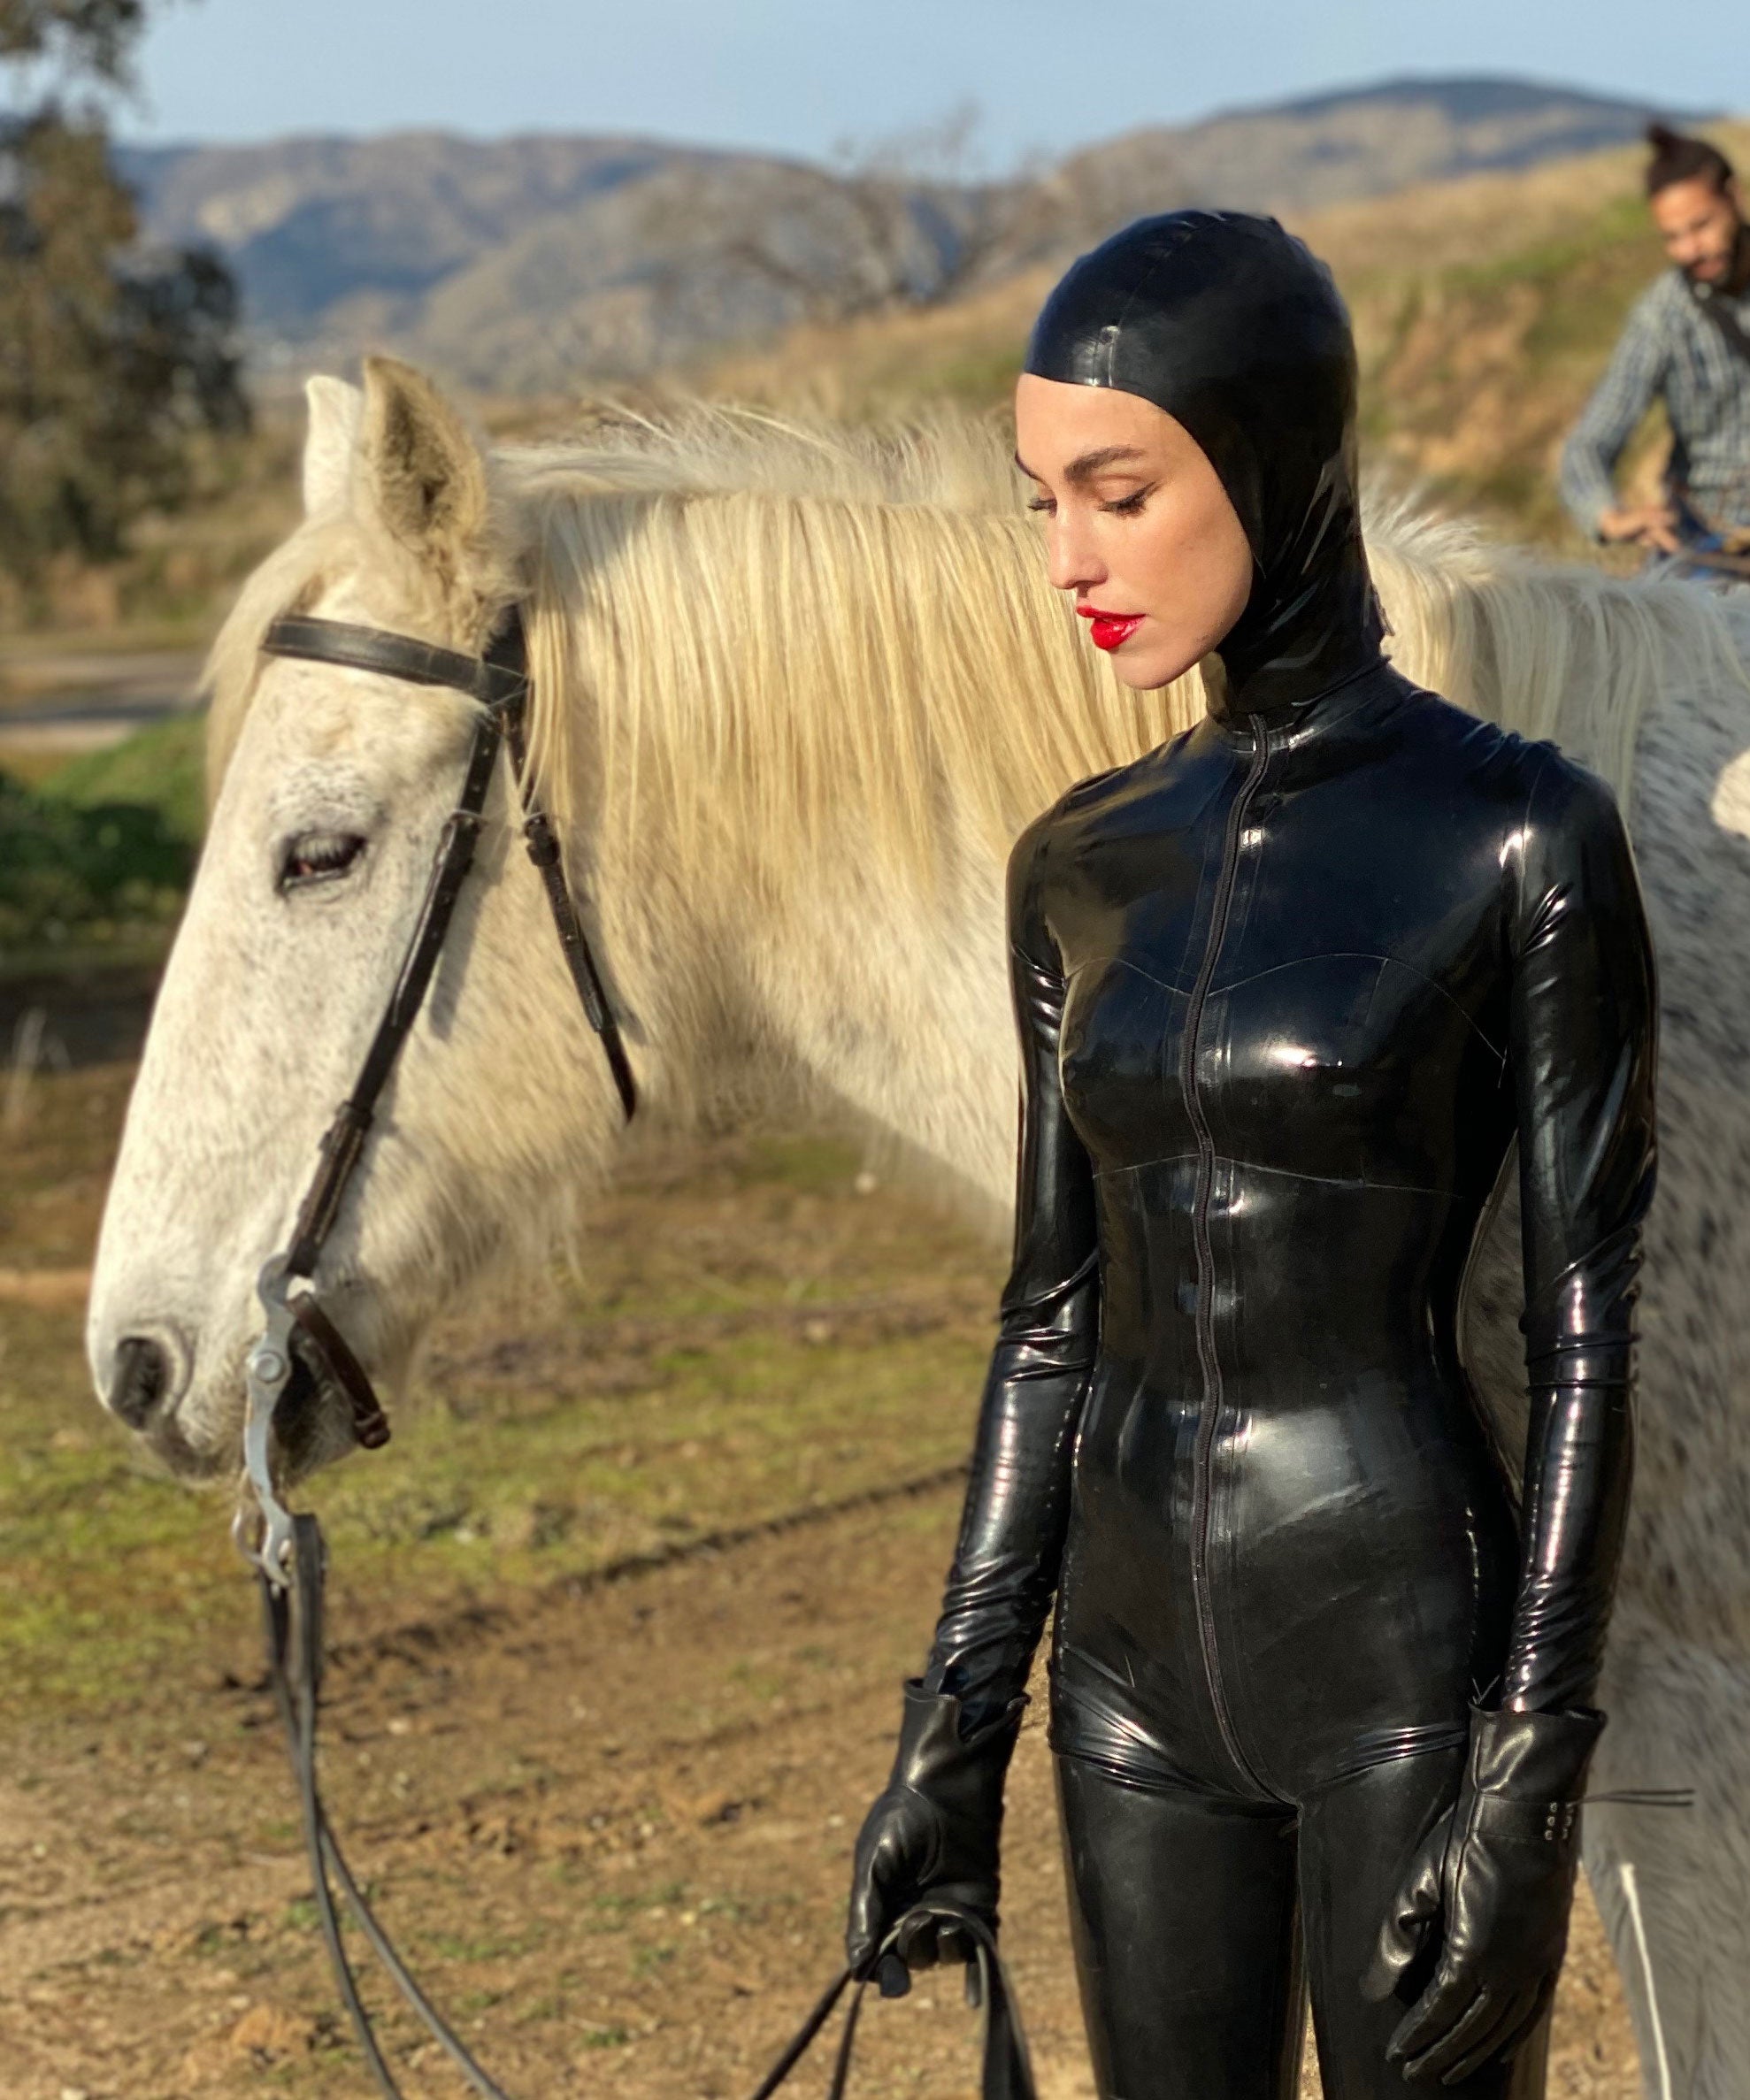 Rainsford 2 Cents Music Video Has A Horse and Latex